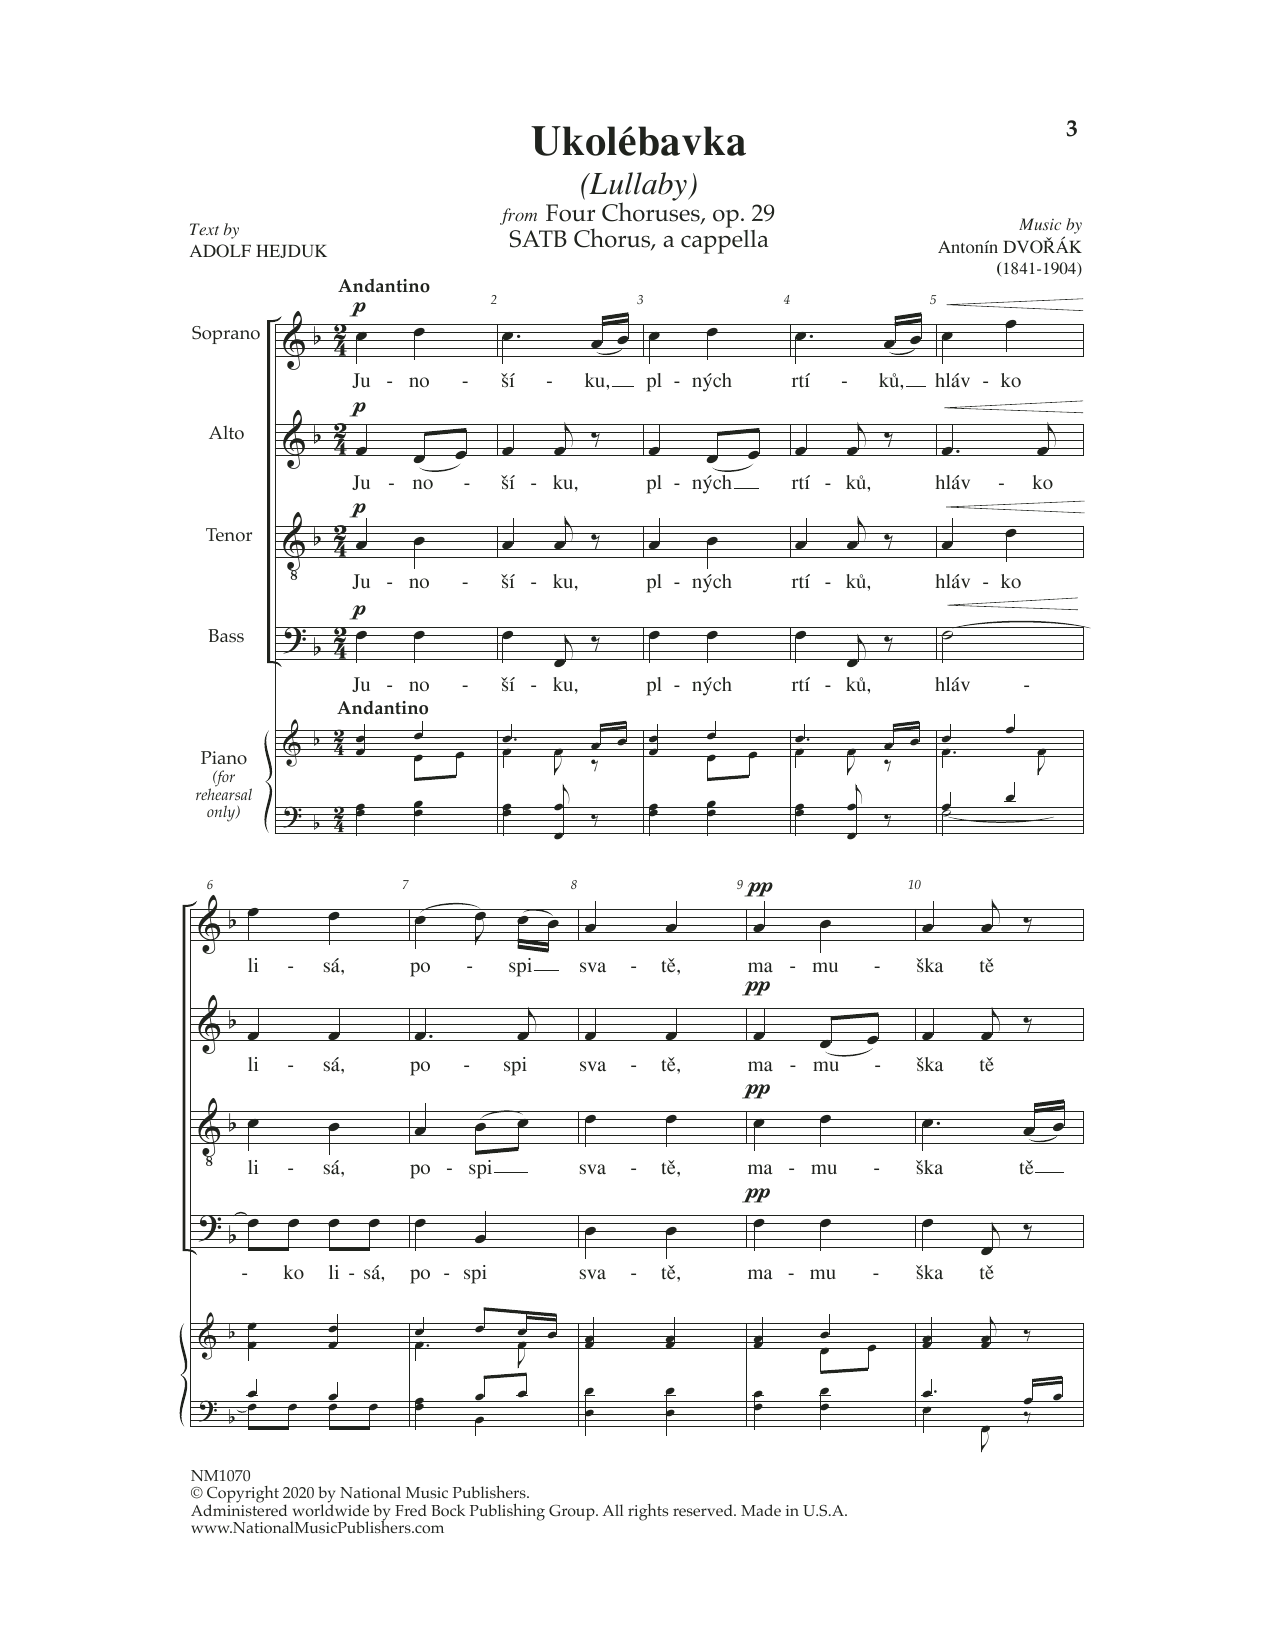 Antonin Dvorák Ukolebavka (Lullaby) Sheet Music Notes & Chords for SATB Choir - Download or Print PDF